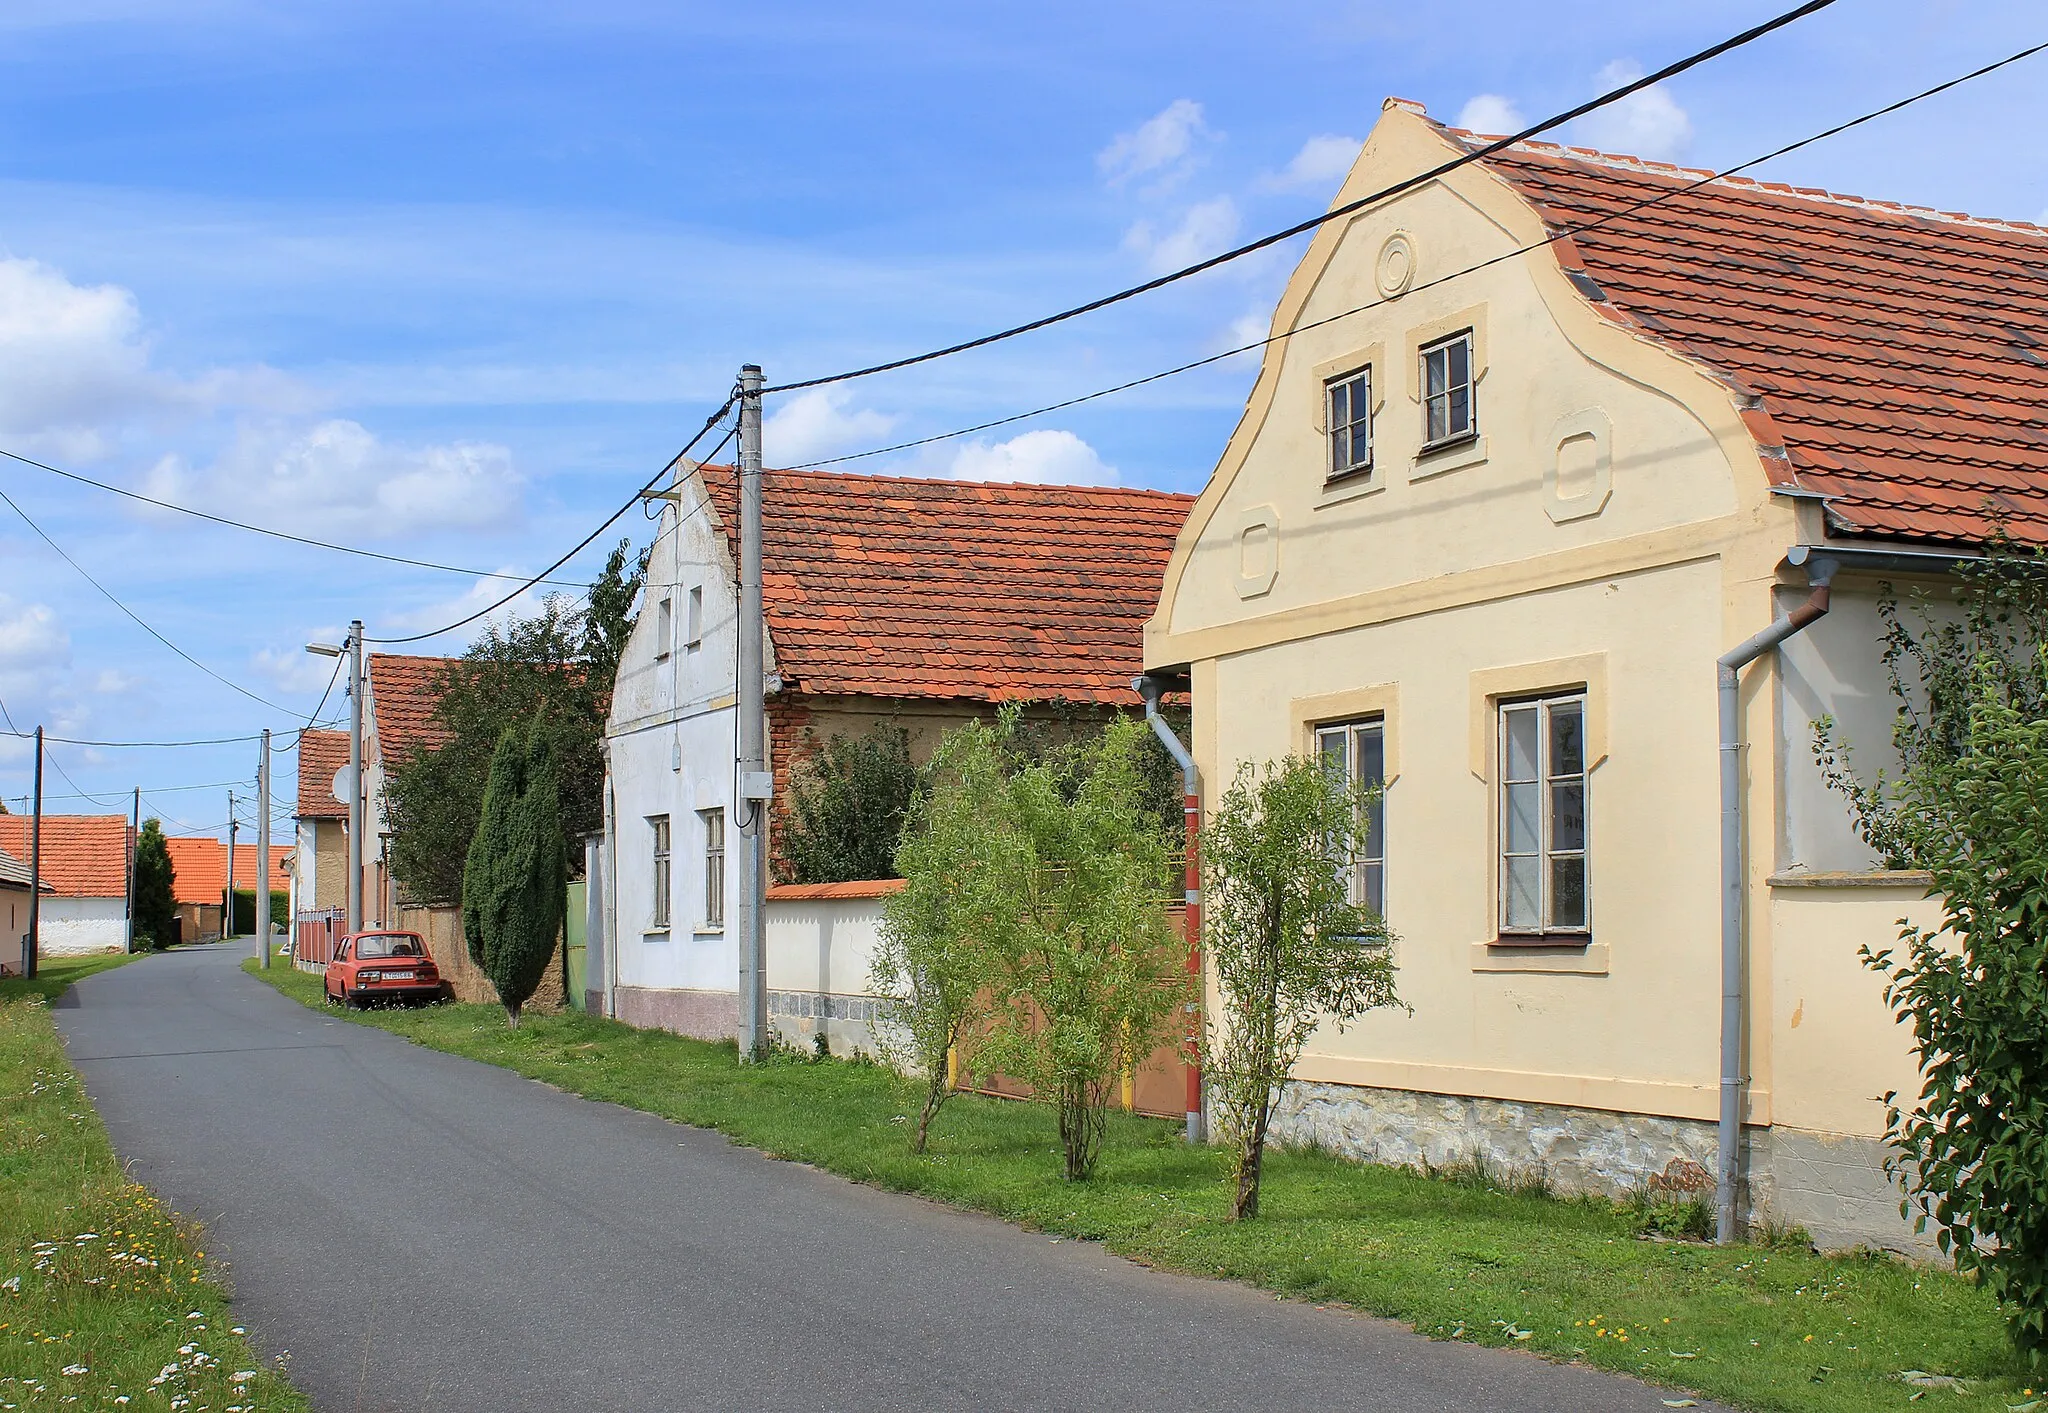 Photo showing: Side street in Poděvousy, Czech Republic.